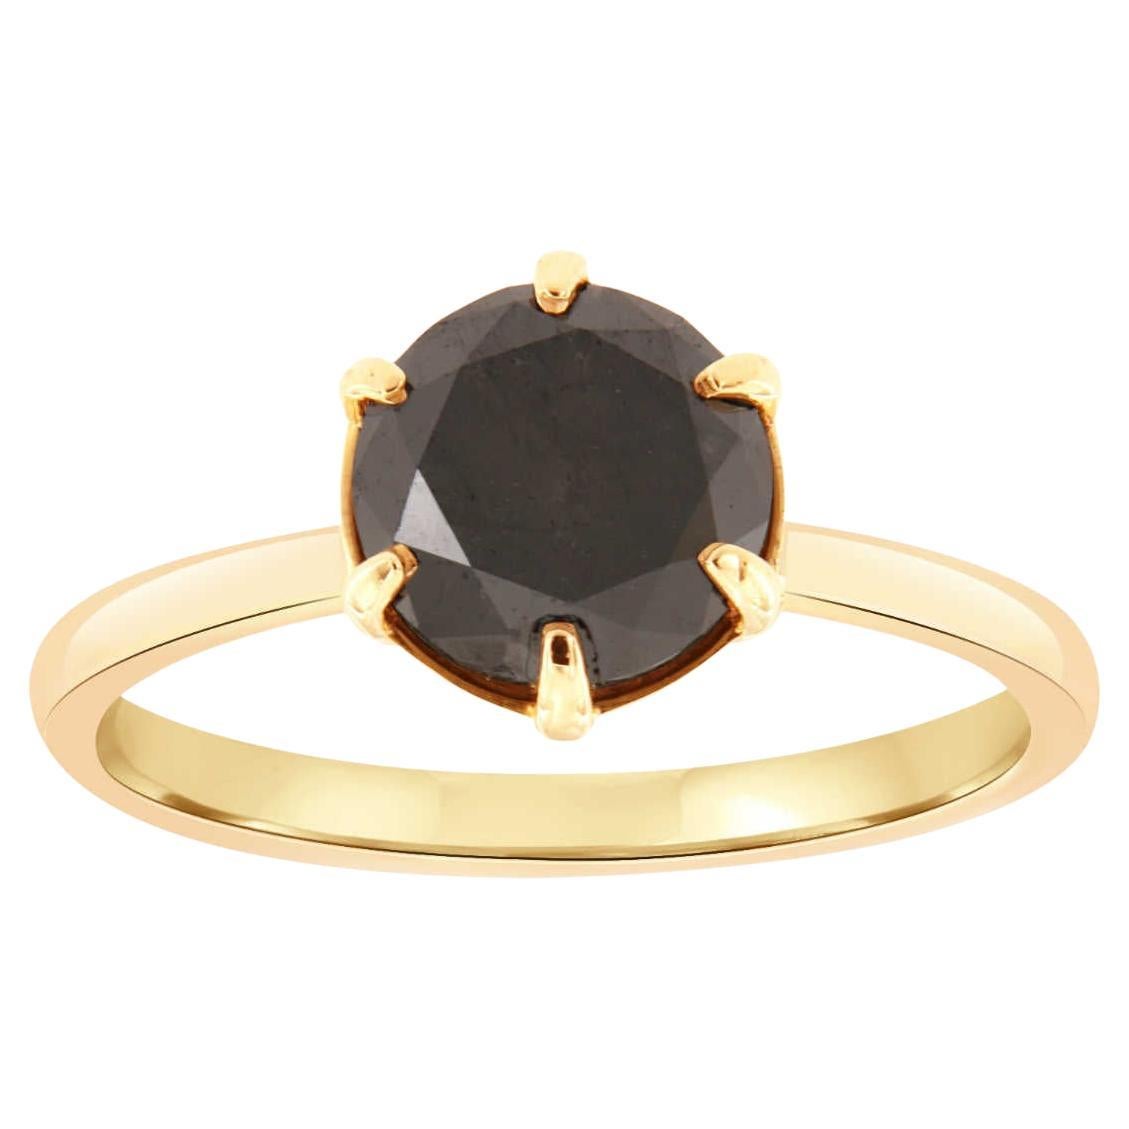 2.25 Carat Round Black Diamond 14k Yellow Gold Solitaire Ring